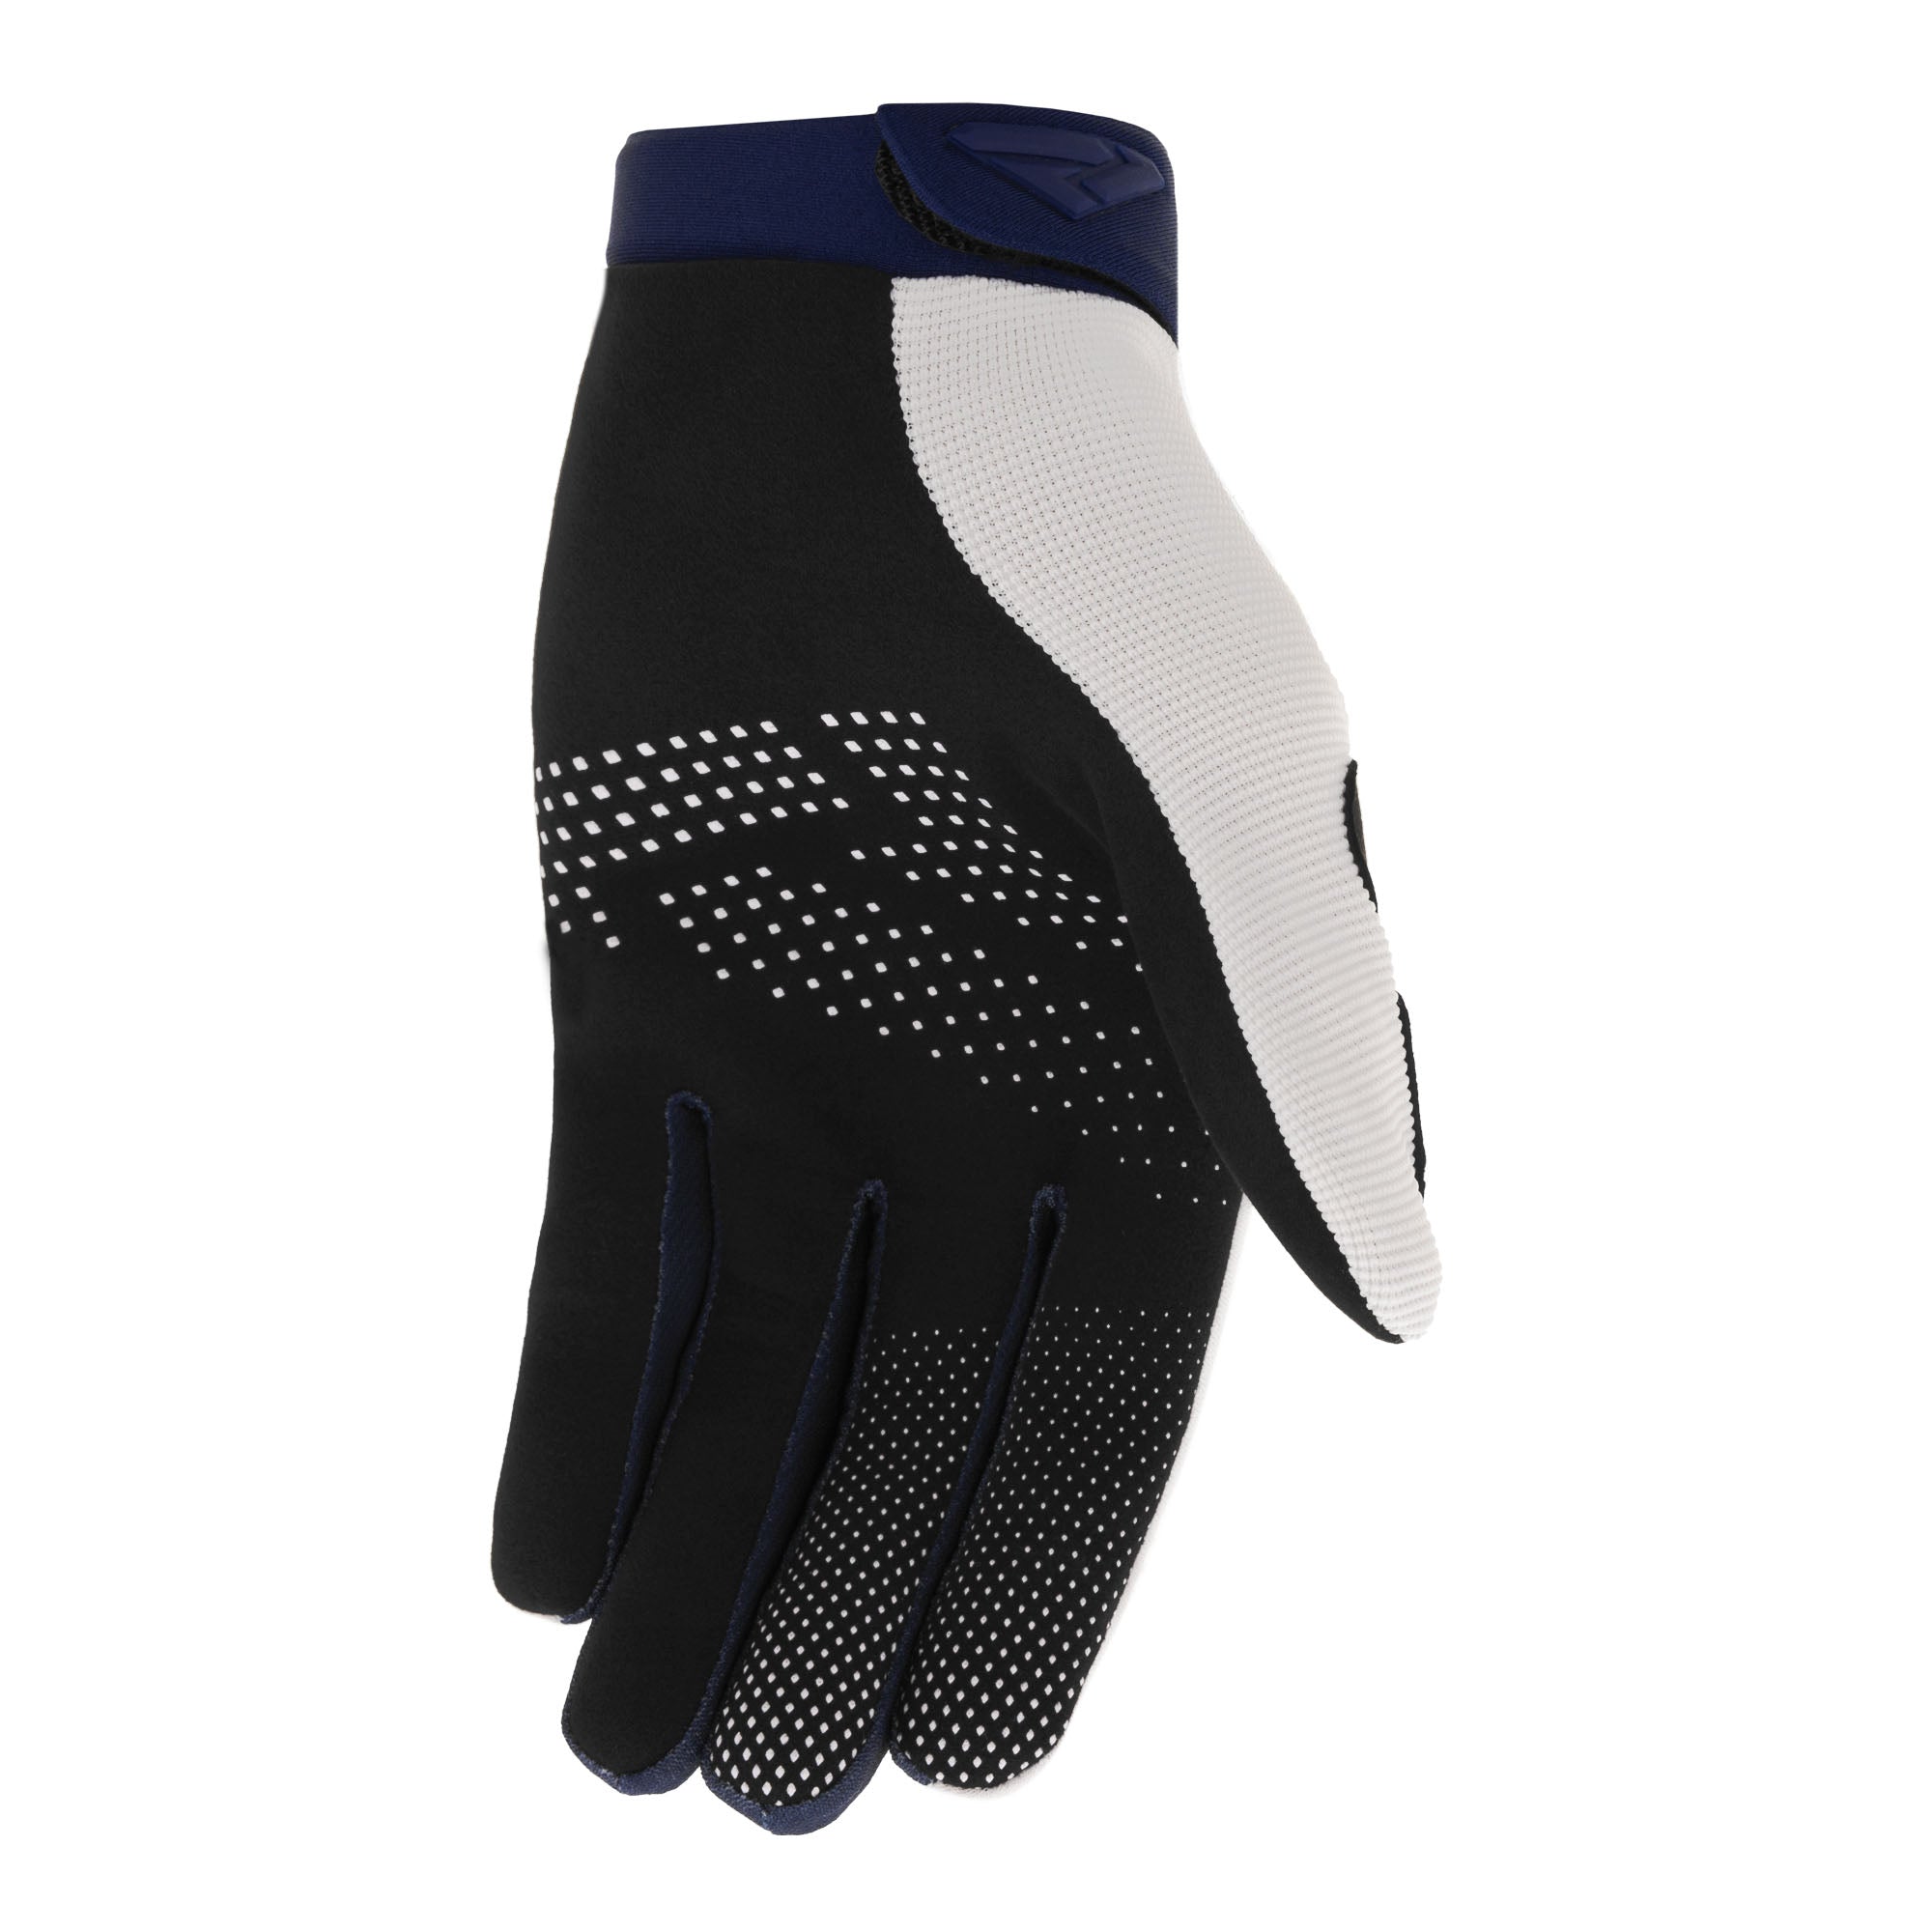 FXR Reflex LE MX Gloves